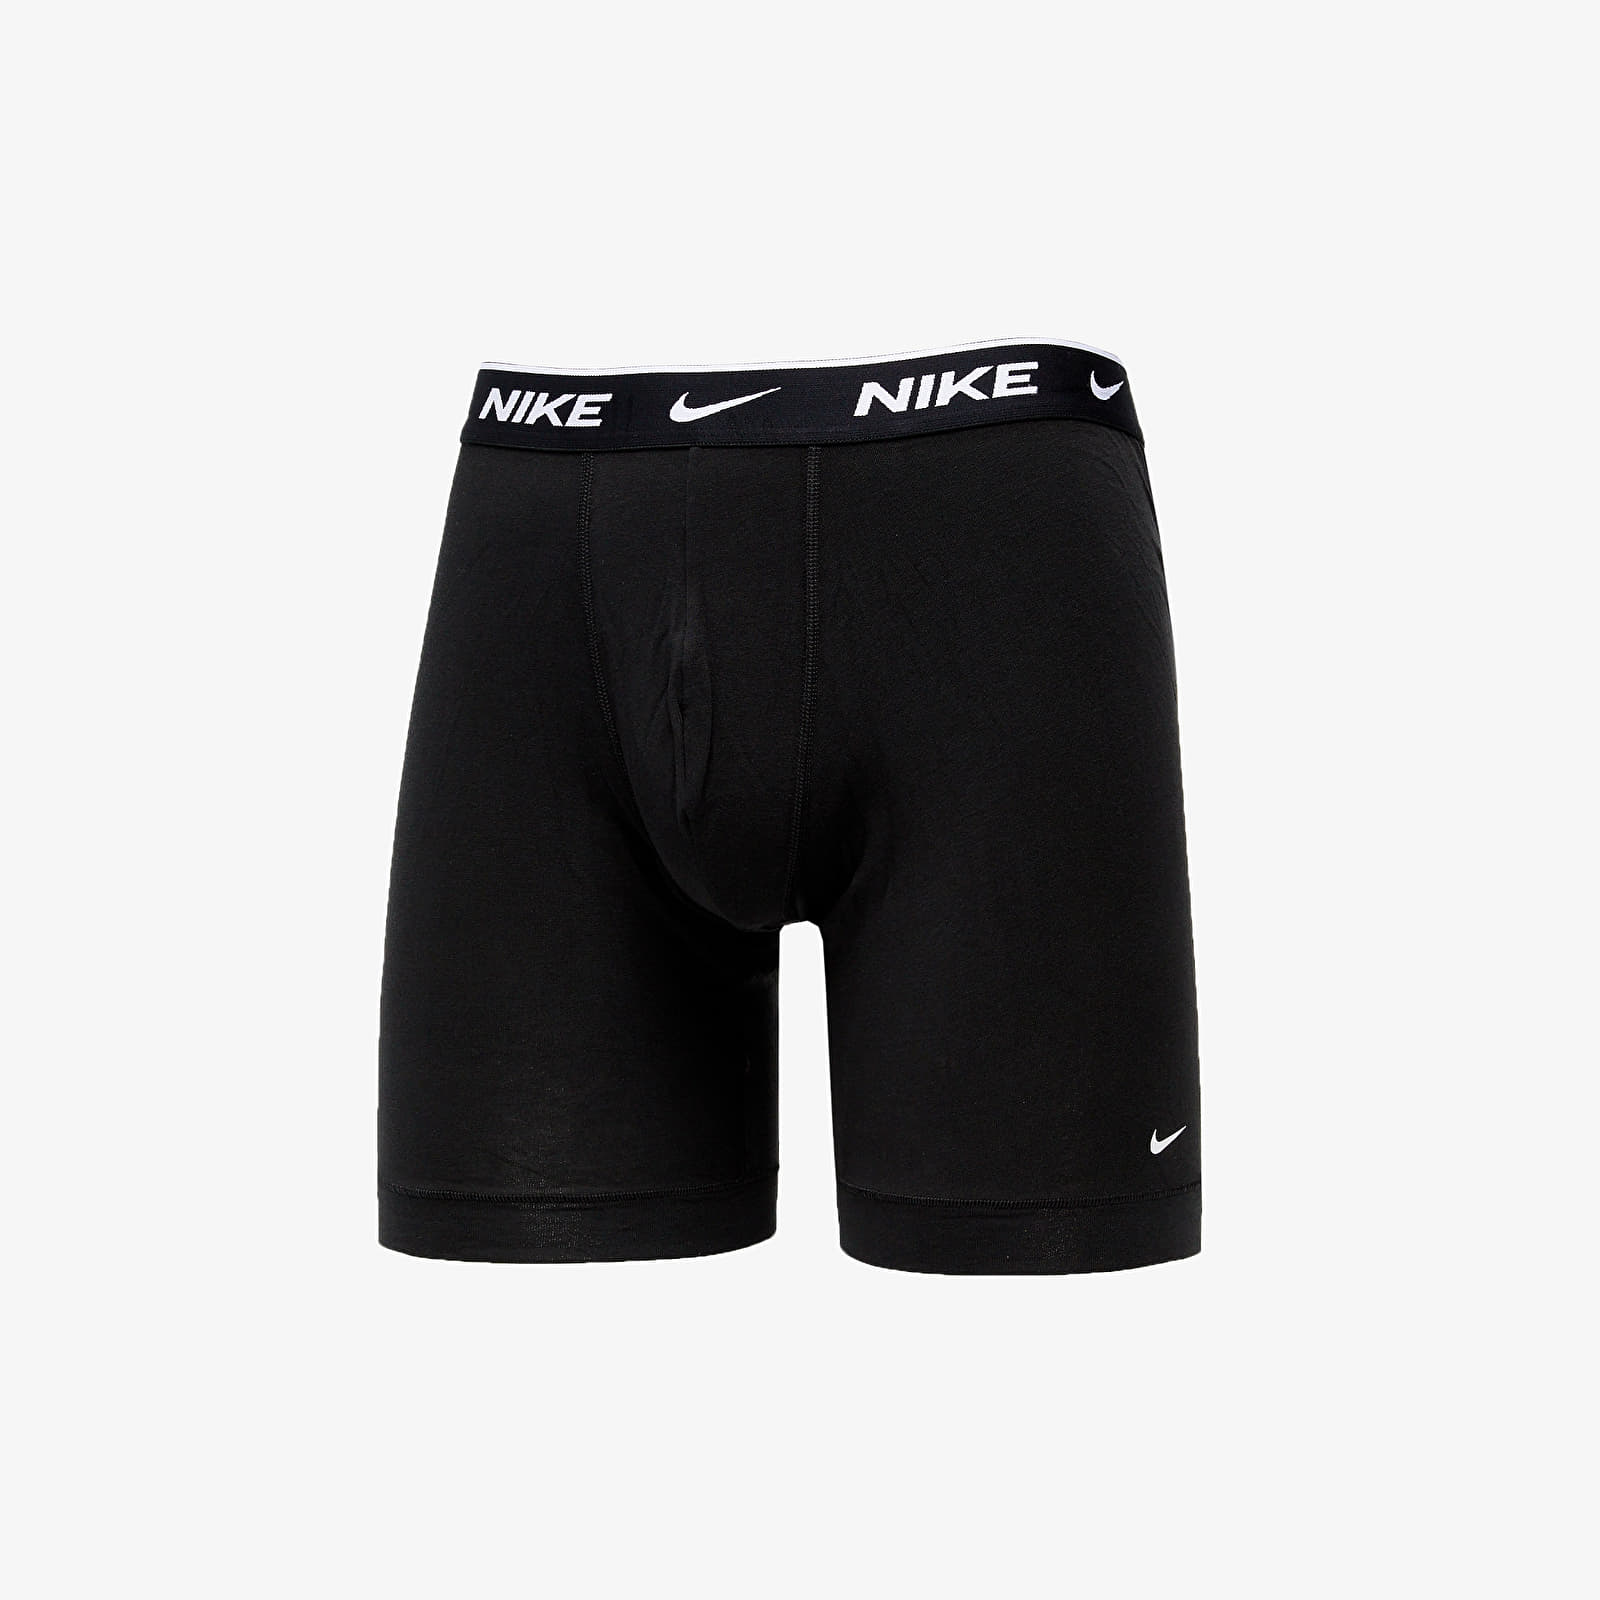 3 Boxers Longs Nike Homme Microfibre Noir